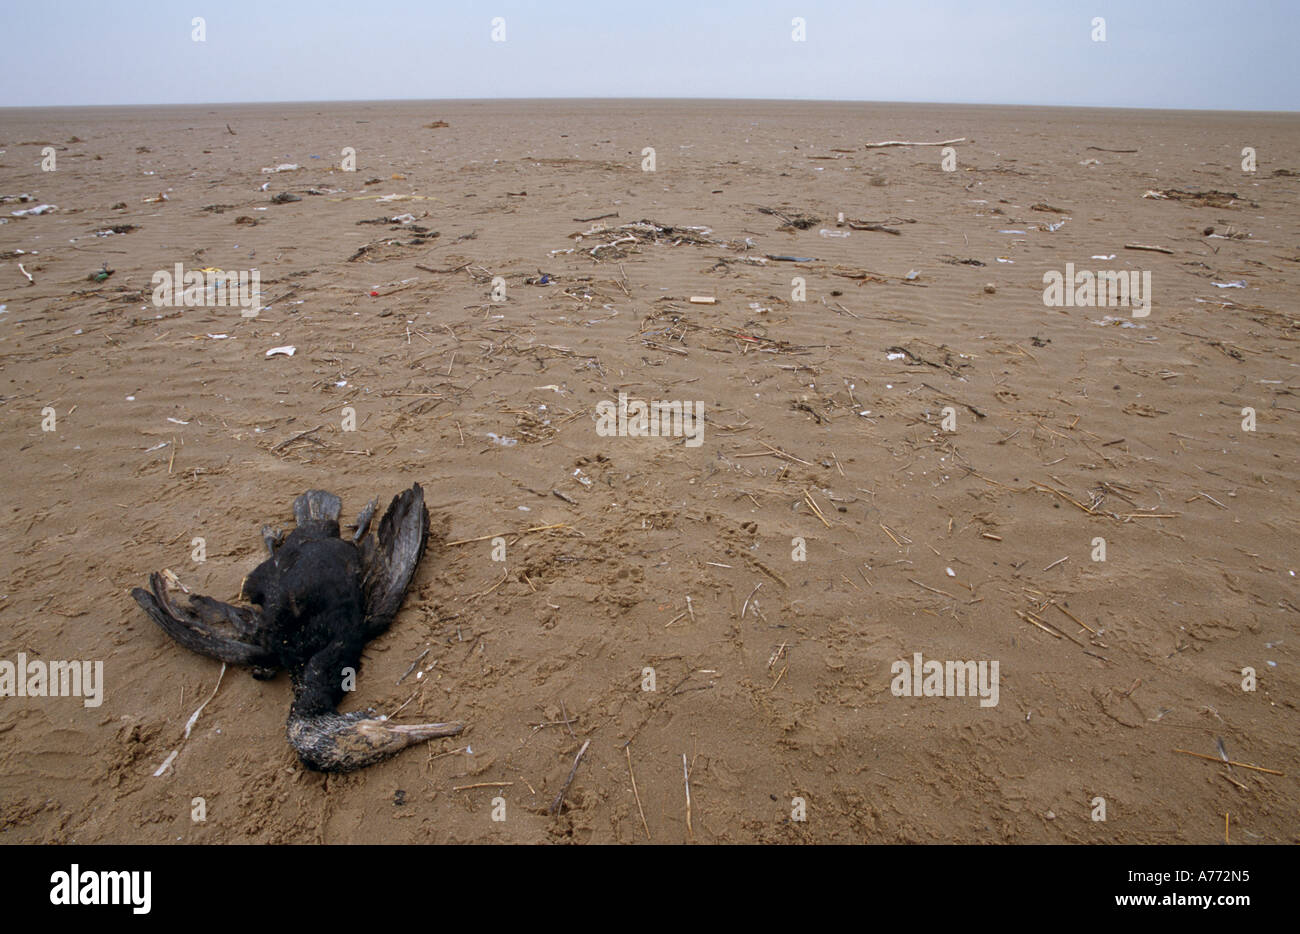 Dead Phalacrocorax carbo. Cormorant on Formby beach, Sefton Coast, England. Stock Photo